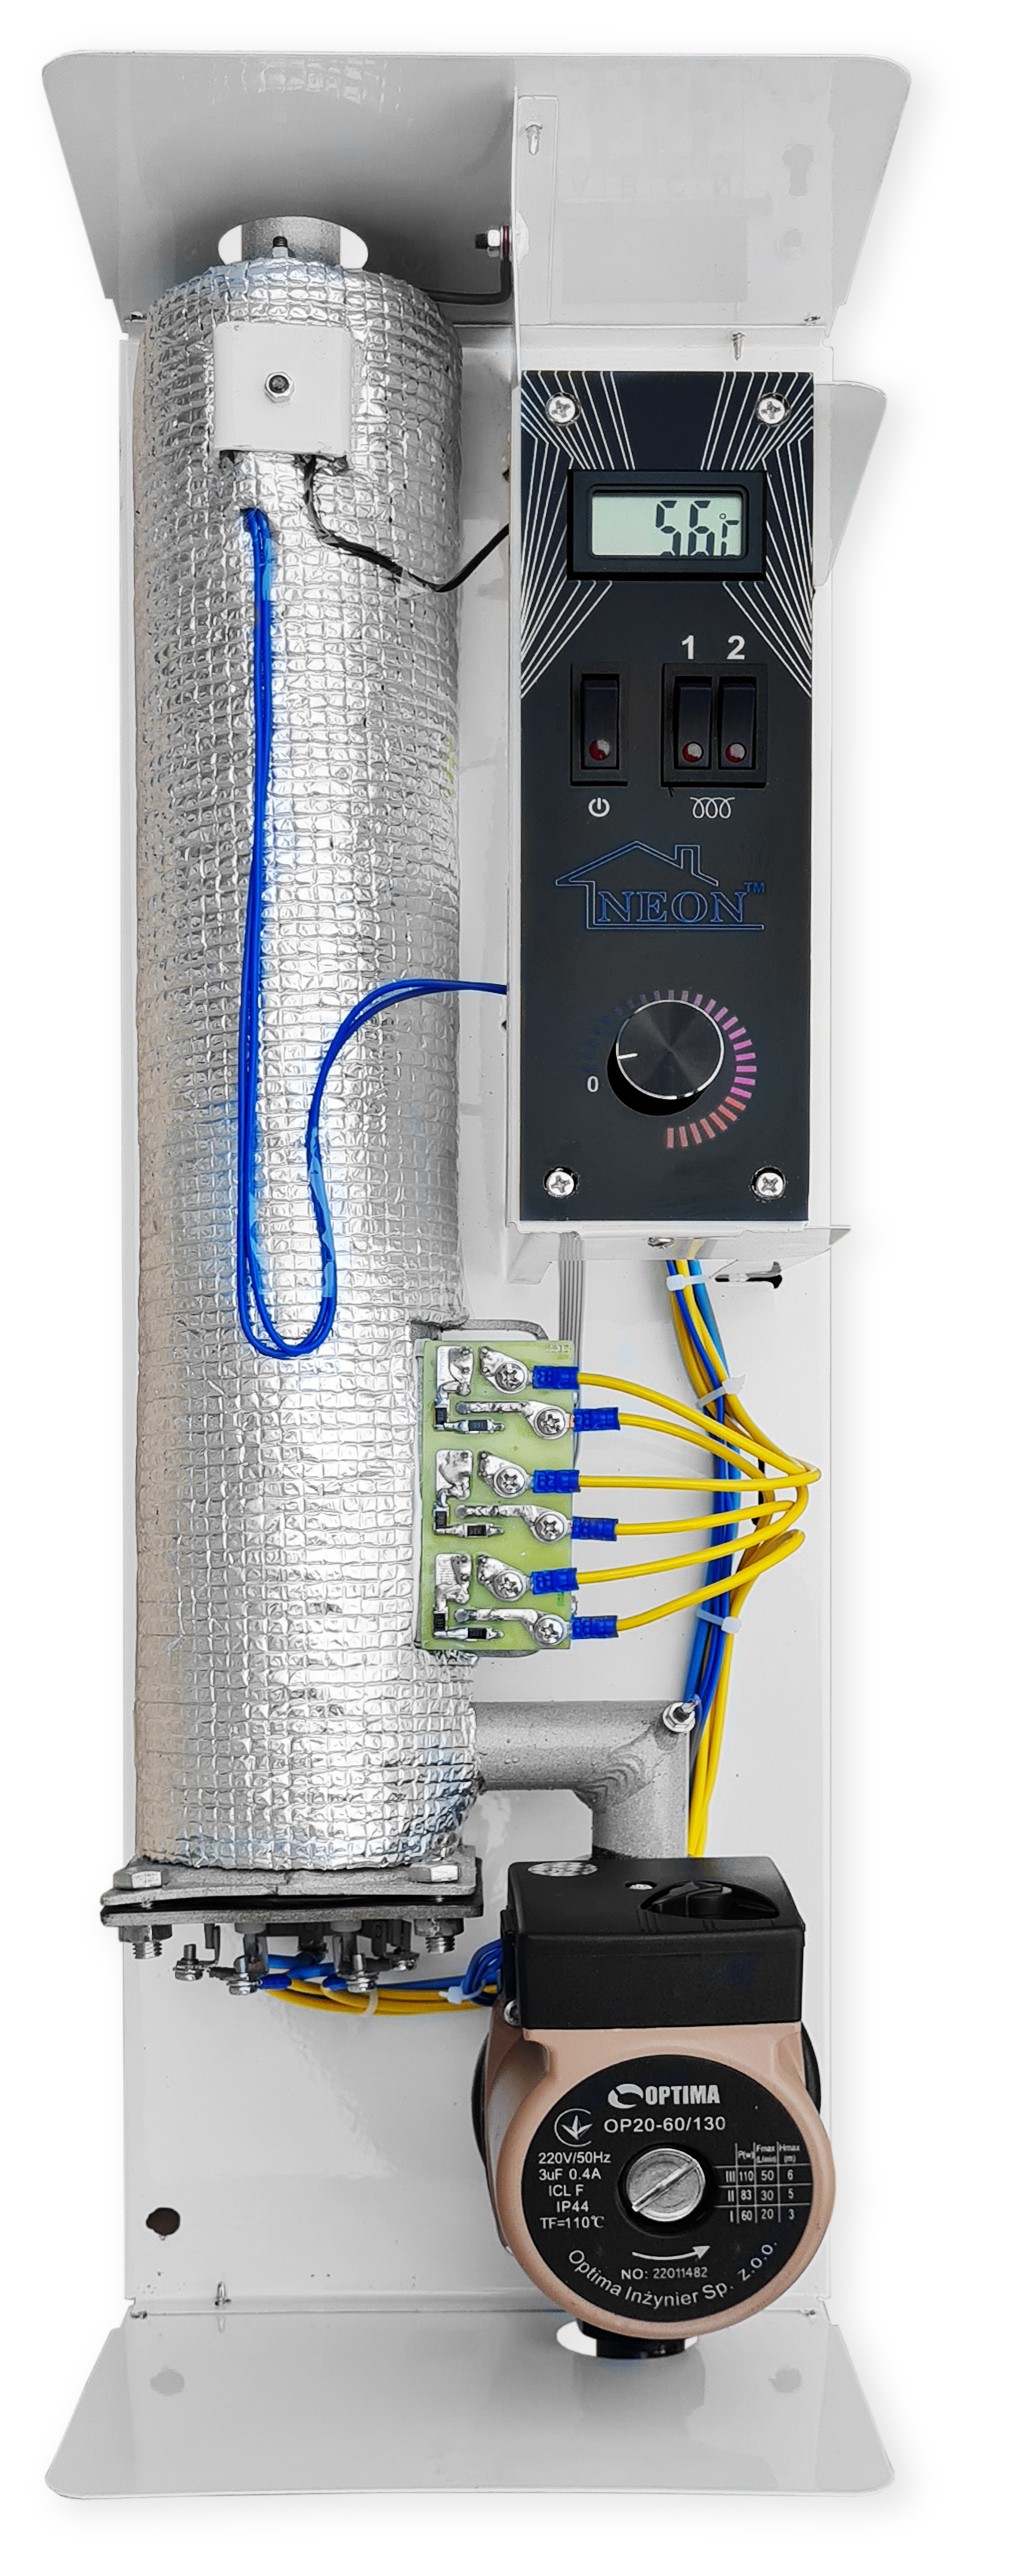 Електричний котел Neon Classik-M 3 кВт 220V (WCSM-3ТХ) характеристики - фотографія 7